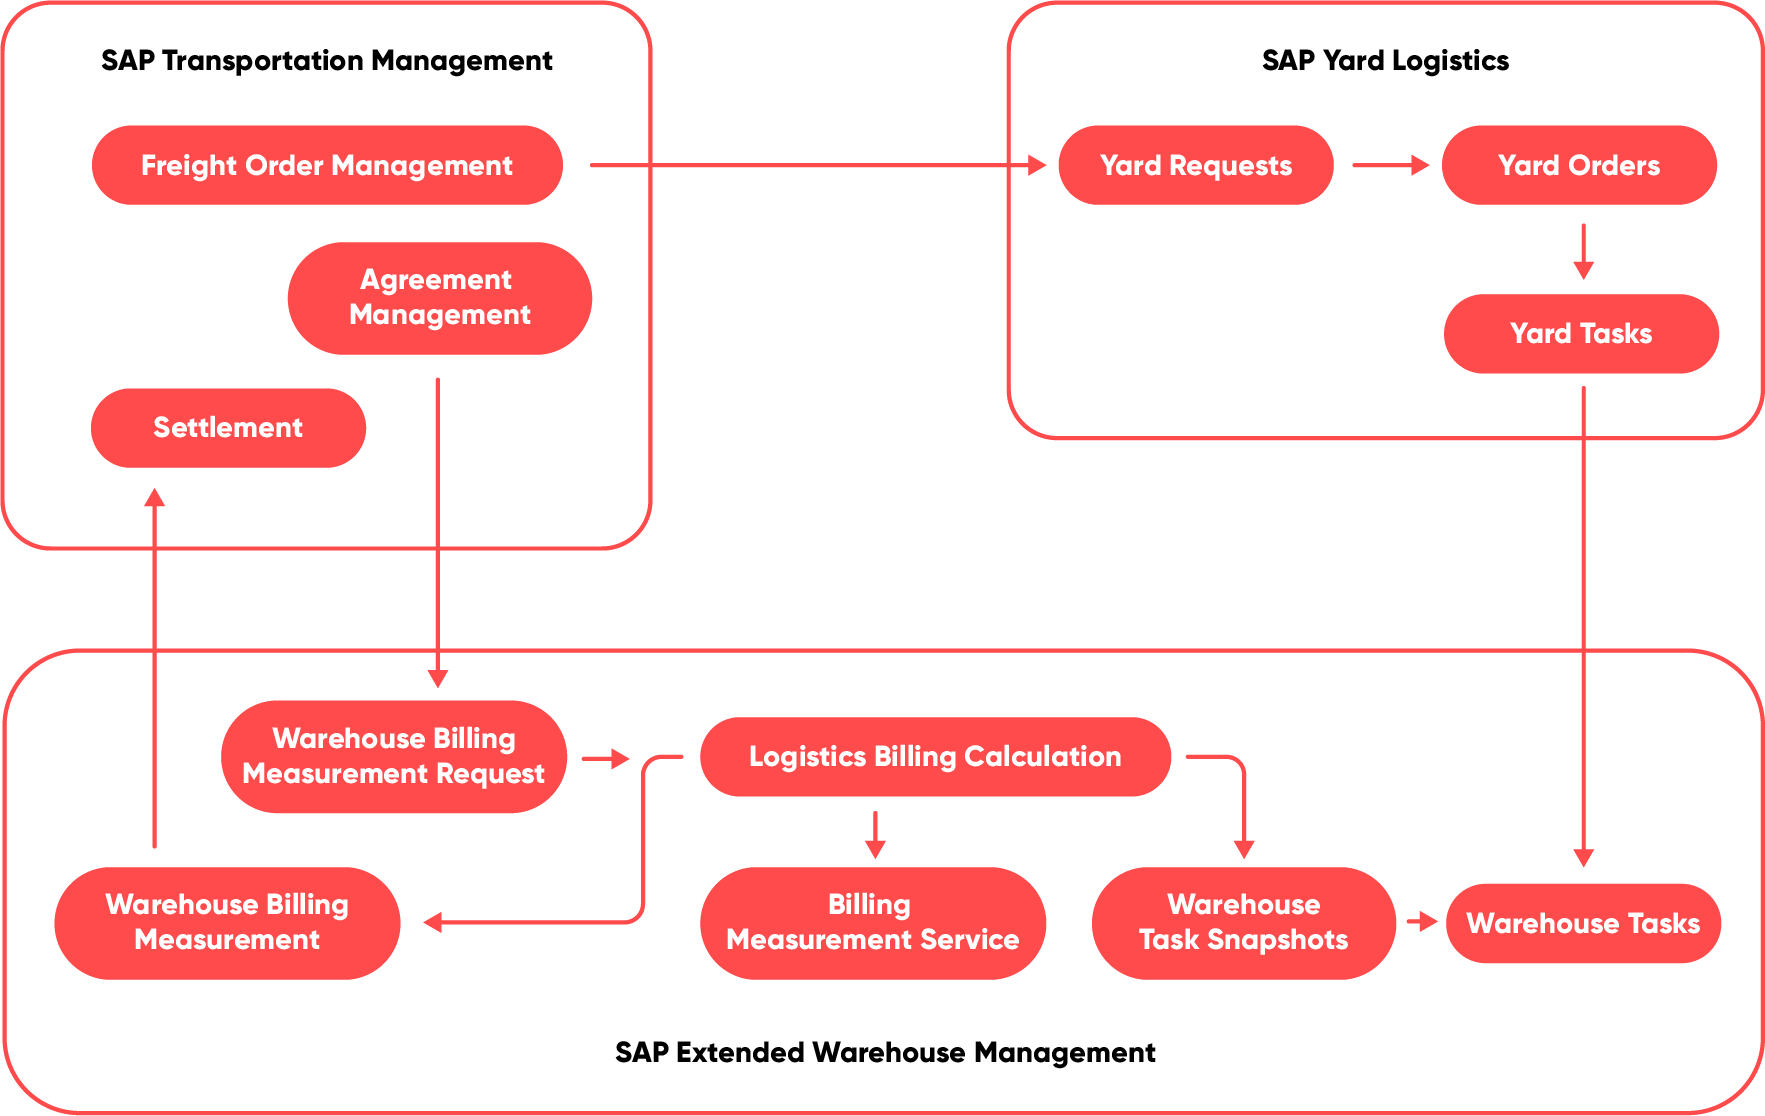 Warehouse billing with SAP Yard Logistics